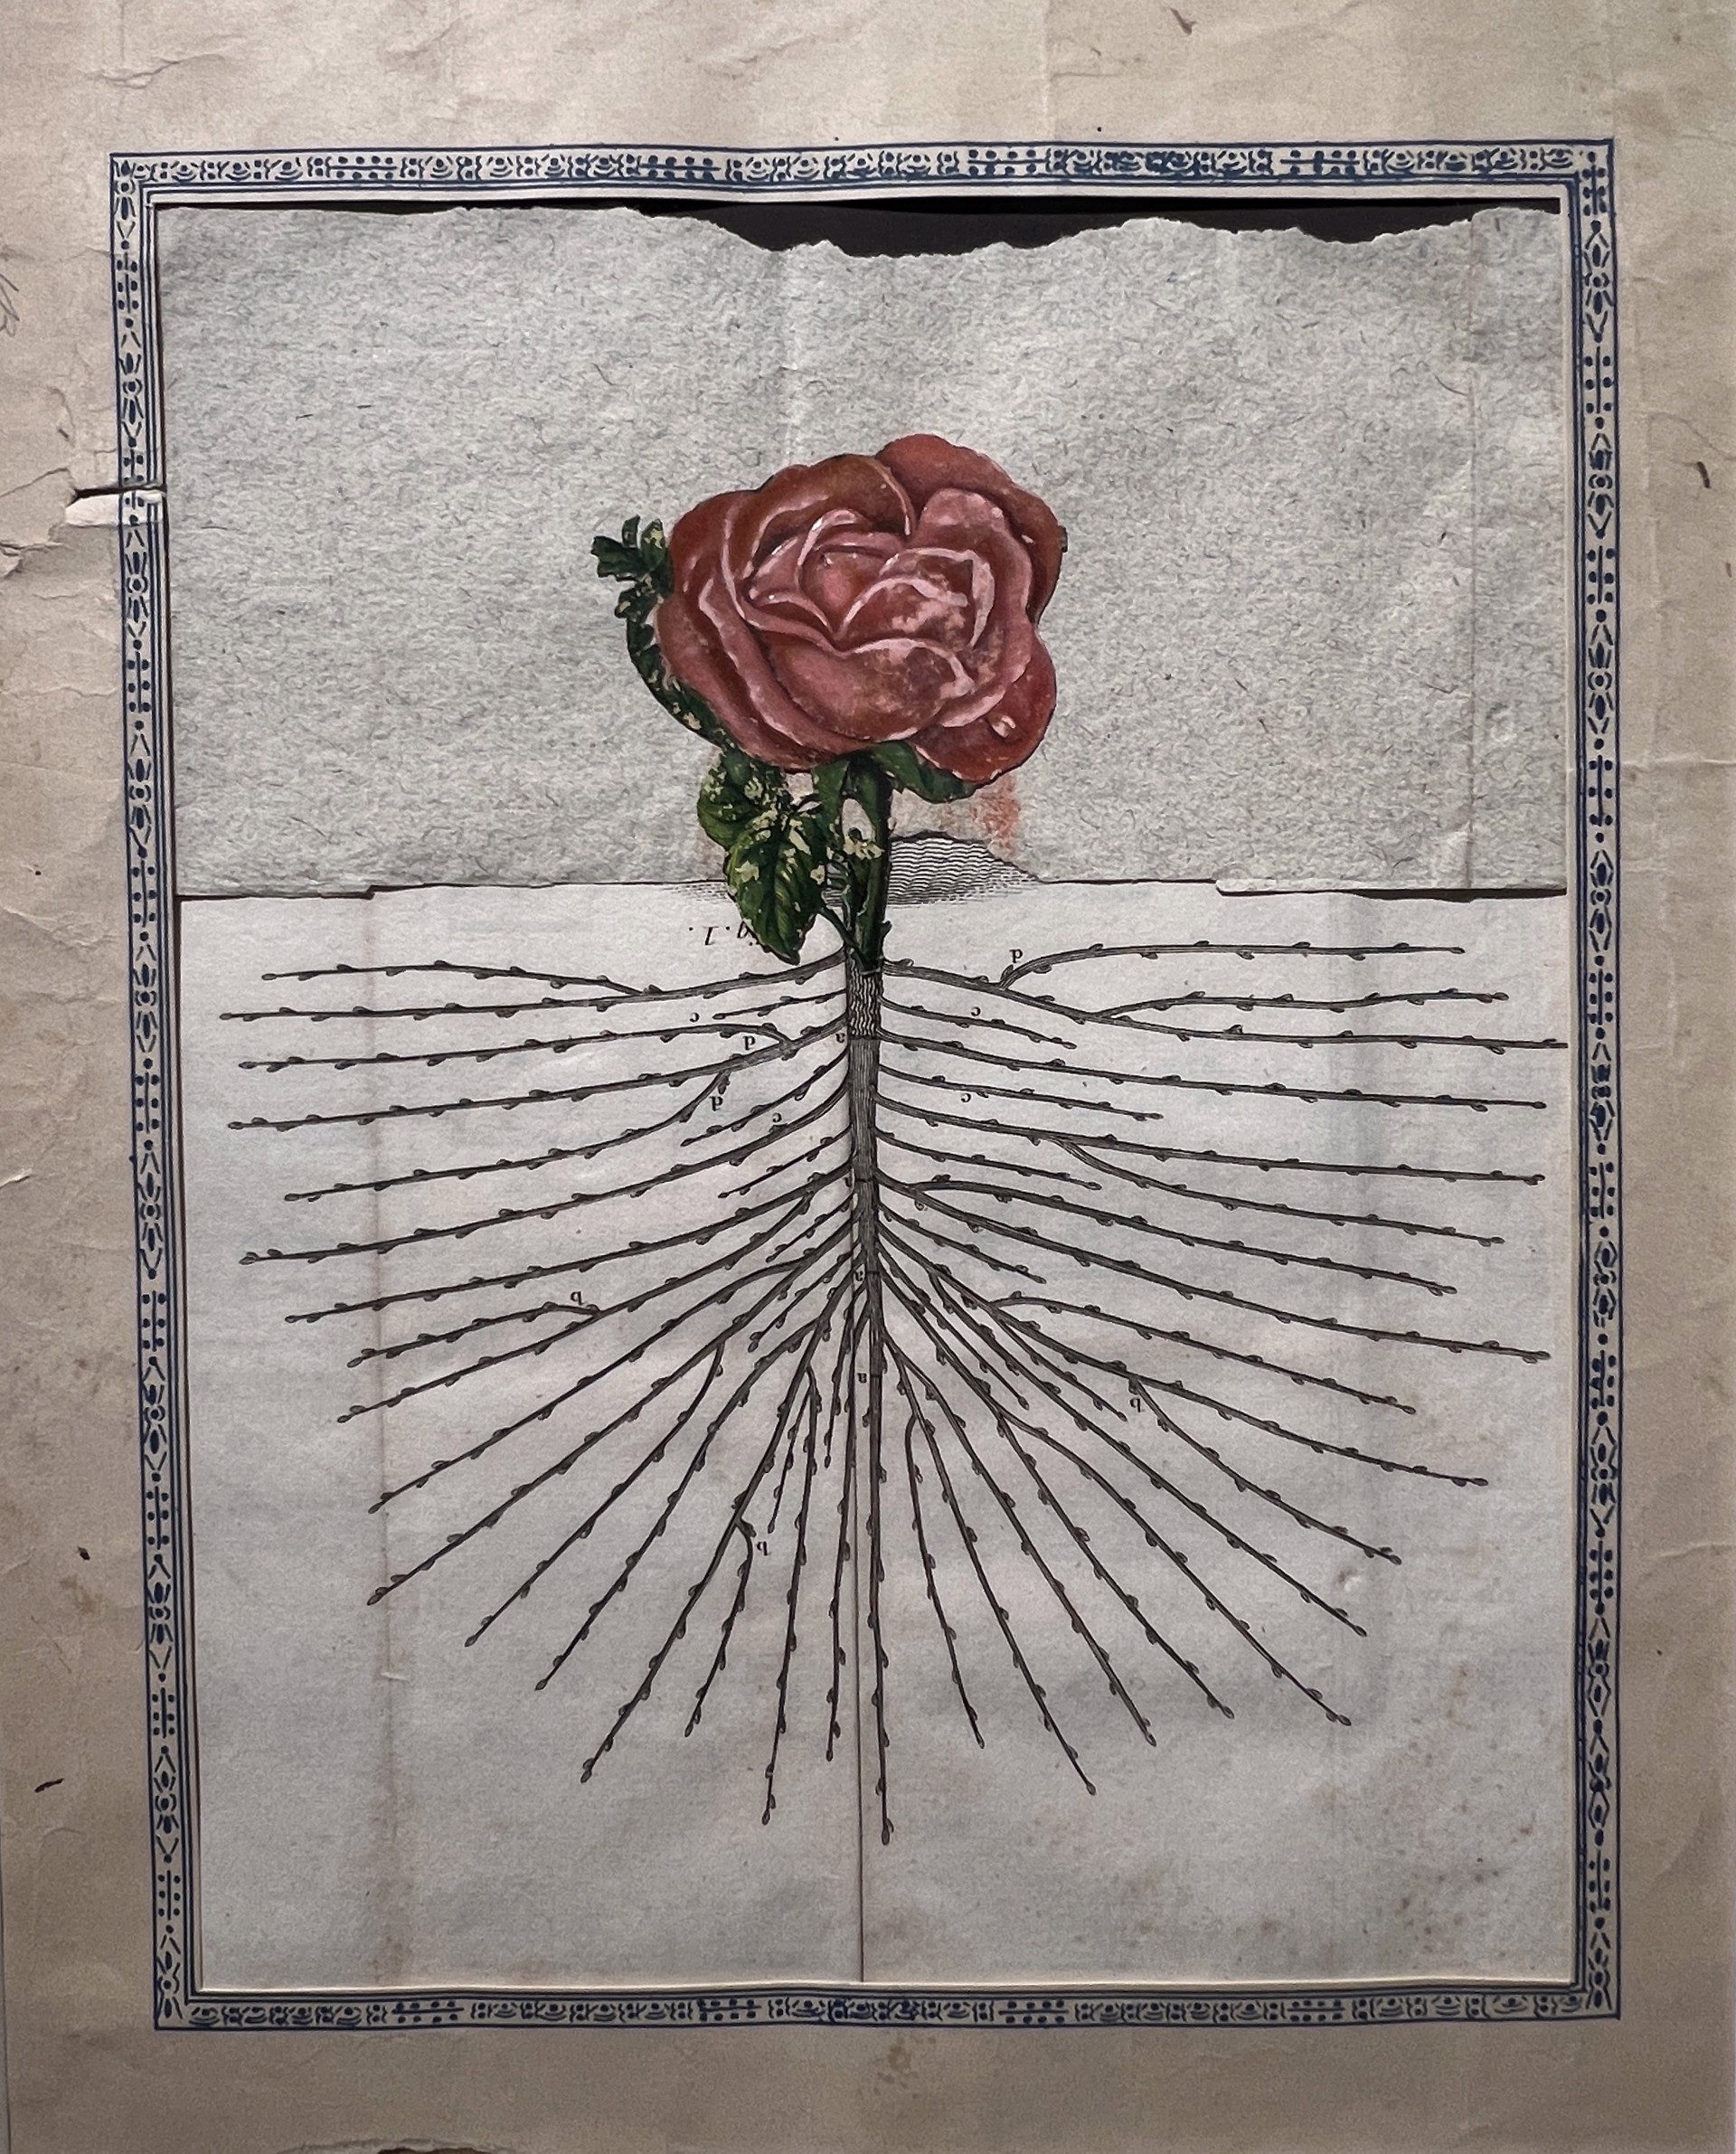 The Rose Tree by Varujan Boghosian